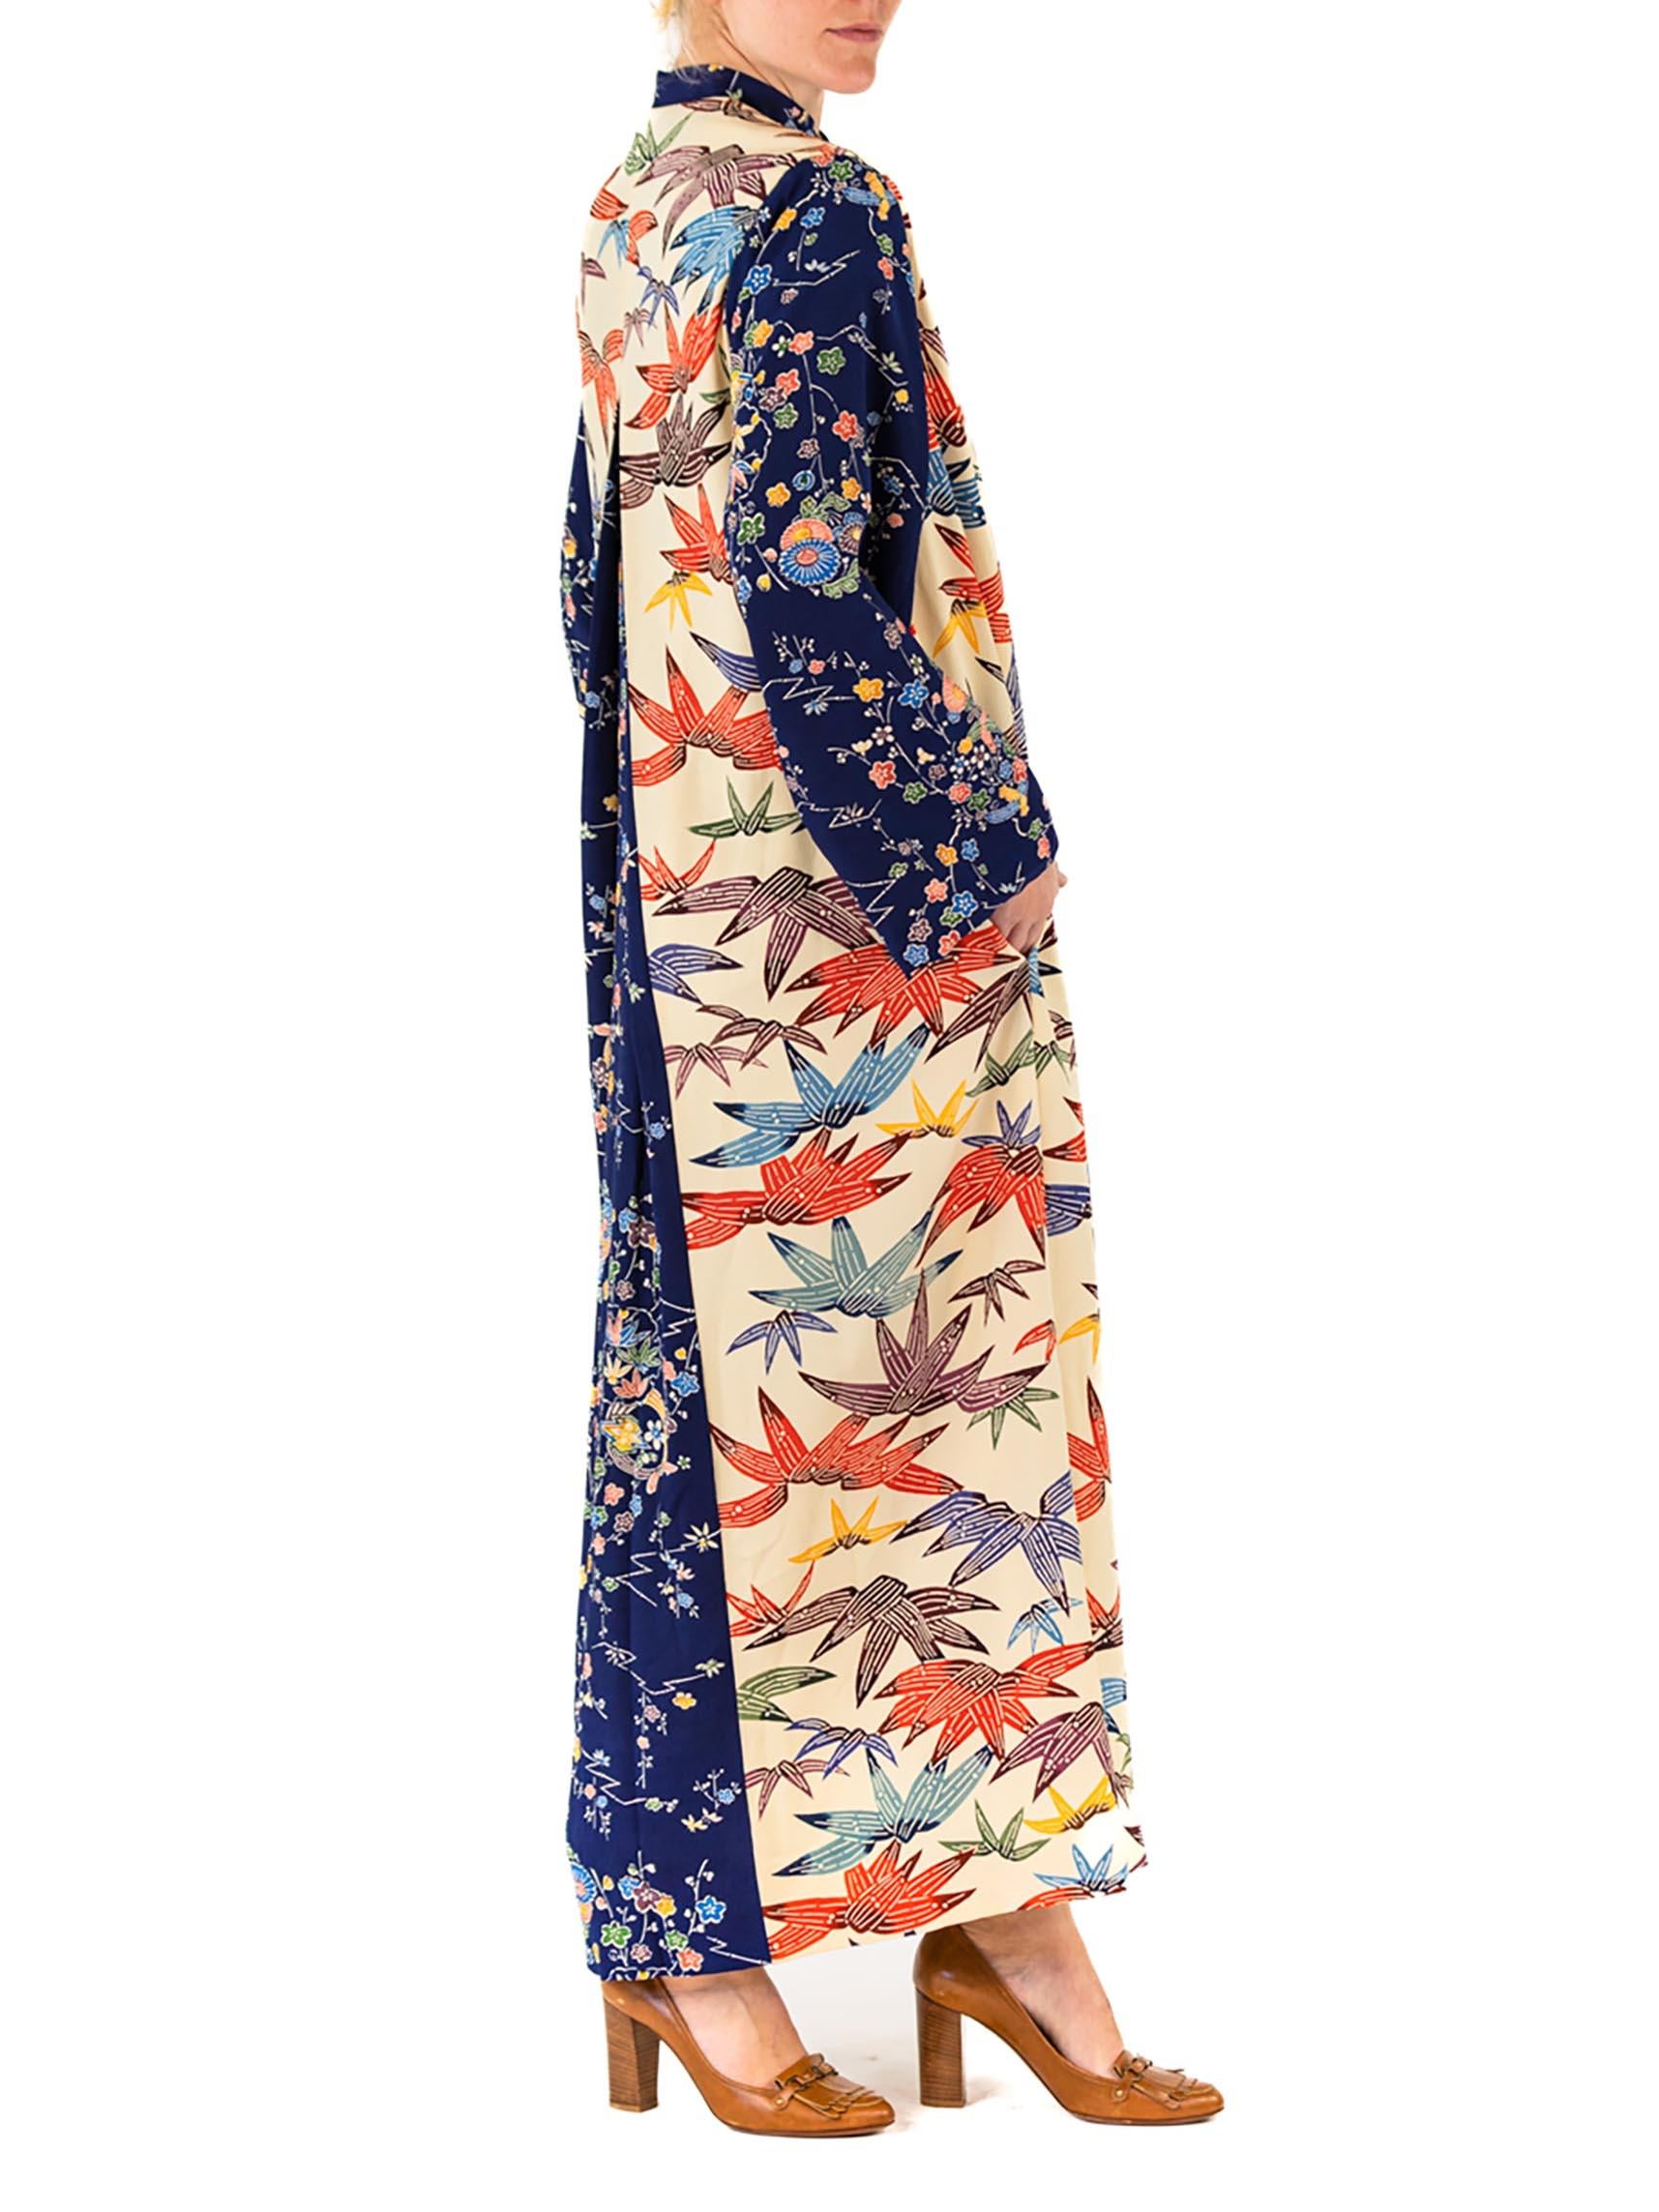 COLLECTION MORPHEW - Robe kimono multicolore en soie crème à manches bleu marine en vente 5